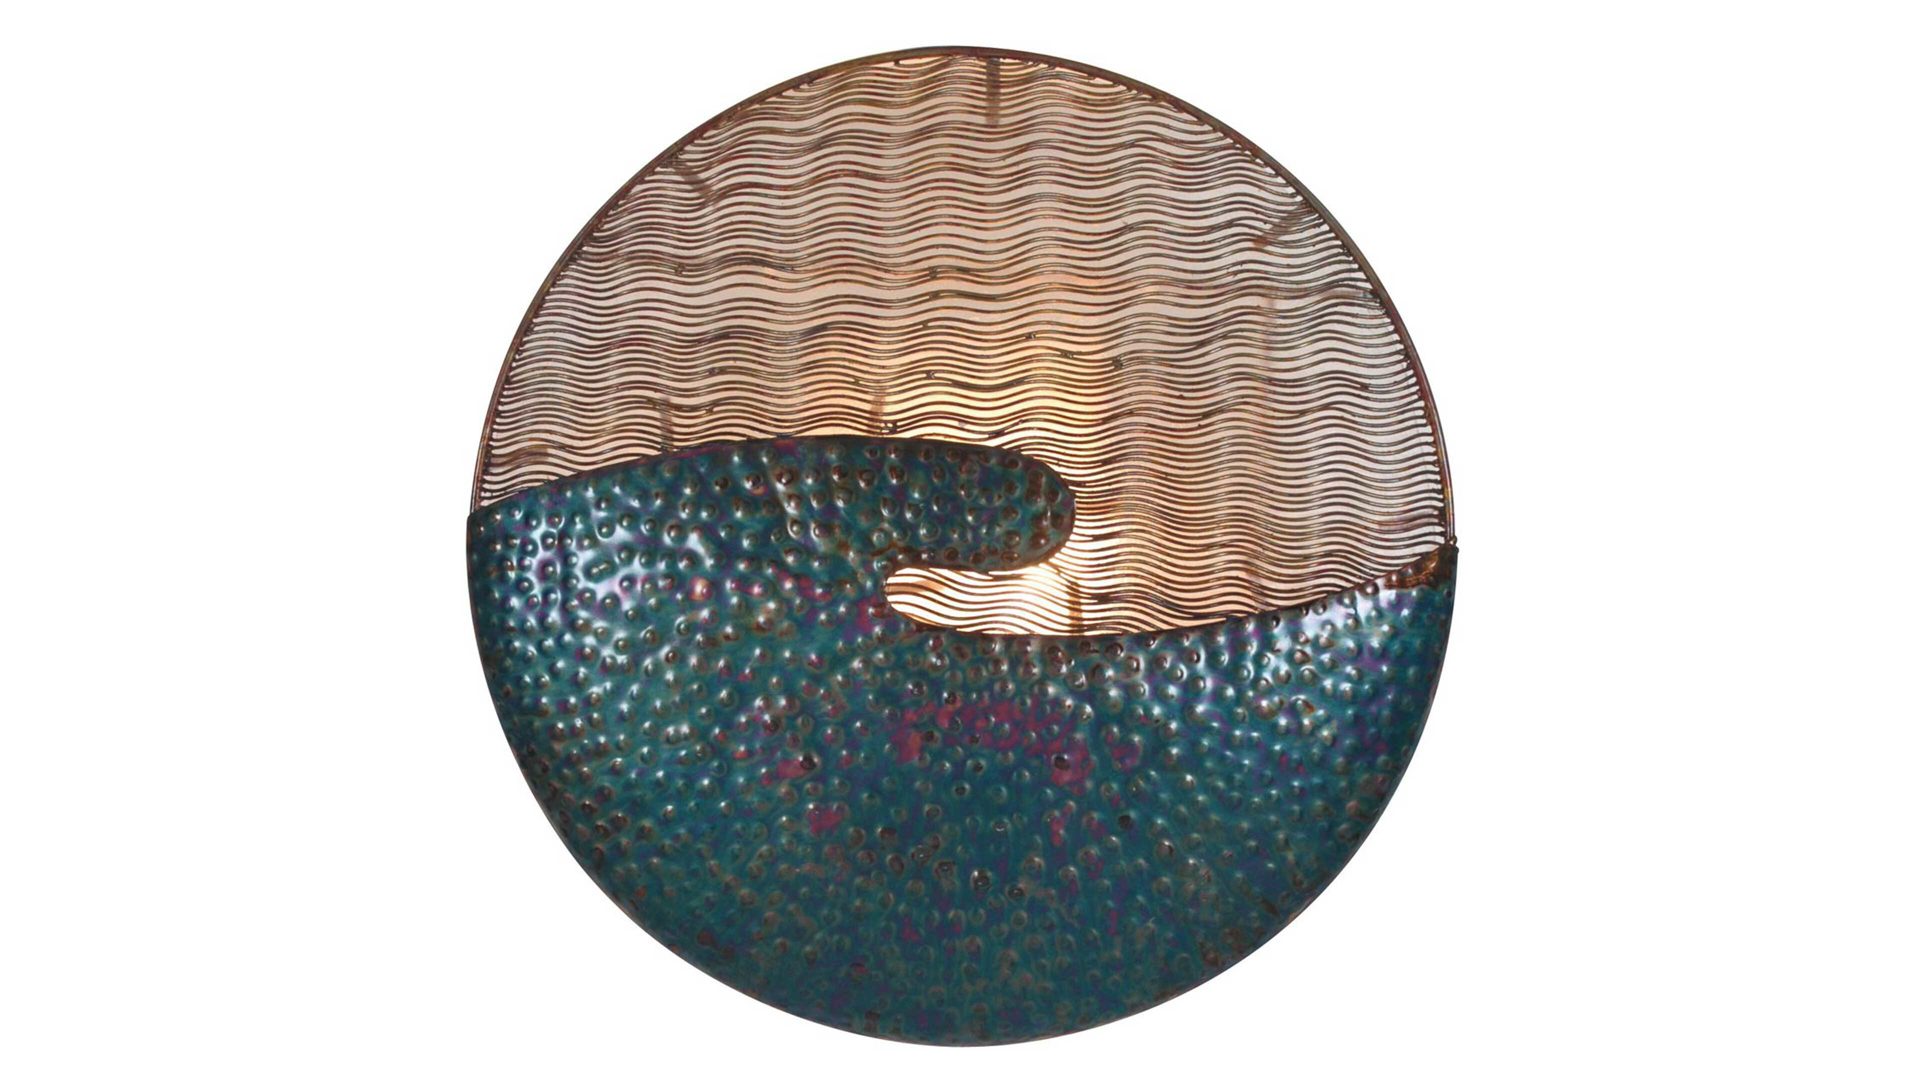 Wandleuchte Näve aus Metall in Braun näve Leuchtbild Bankok Metall & Acryl – Durchmesser ca. 58 cm